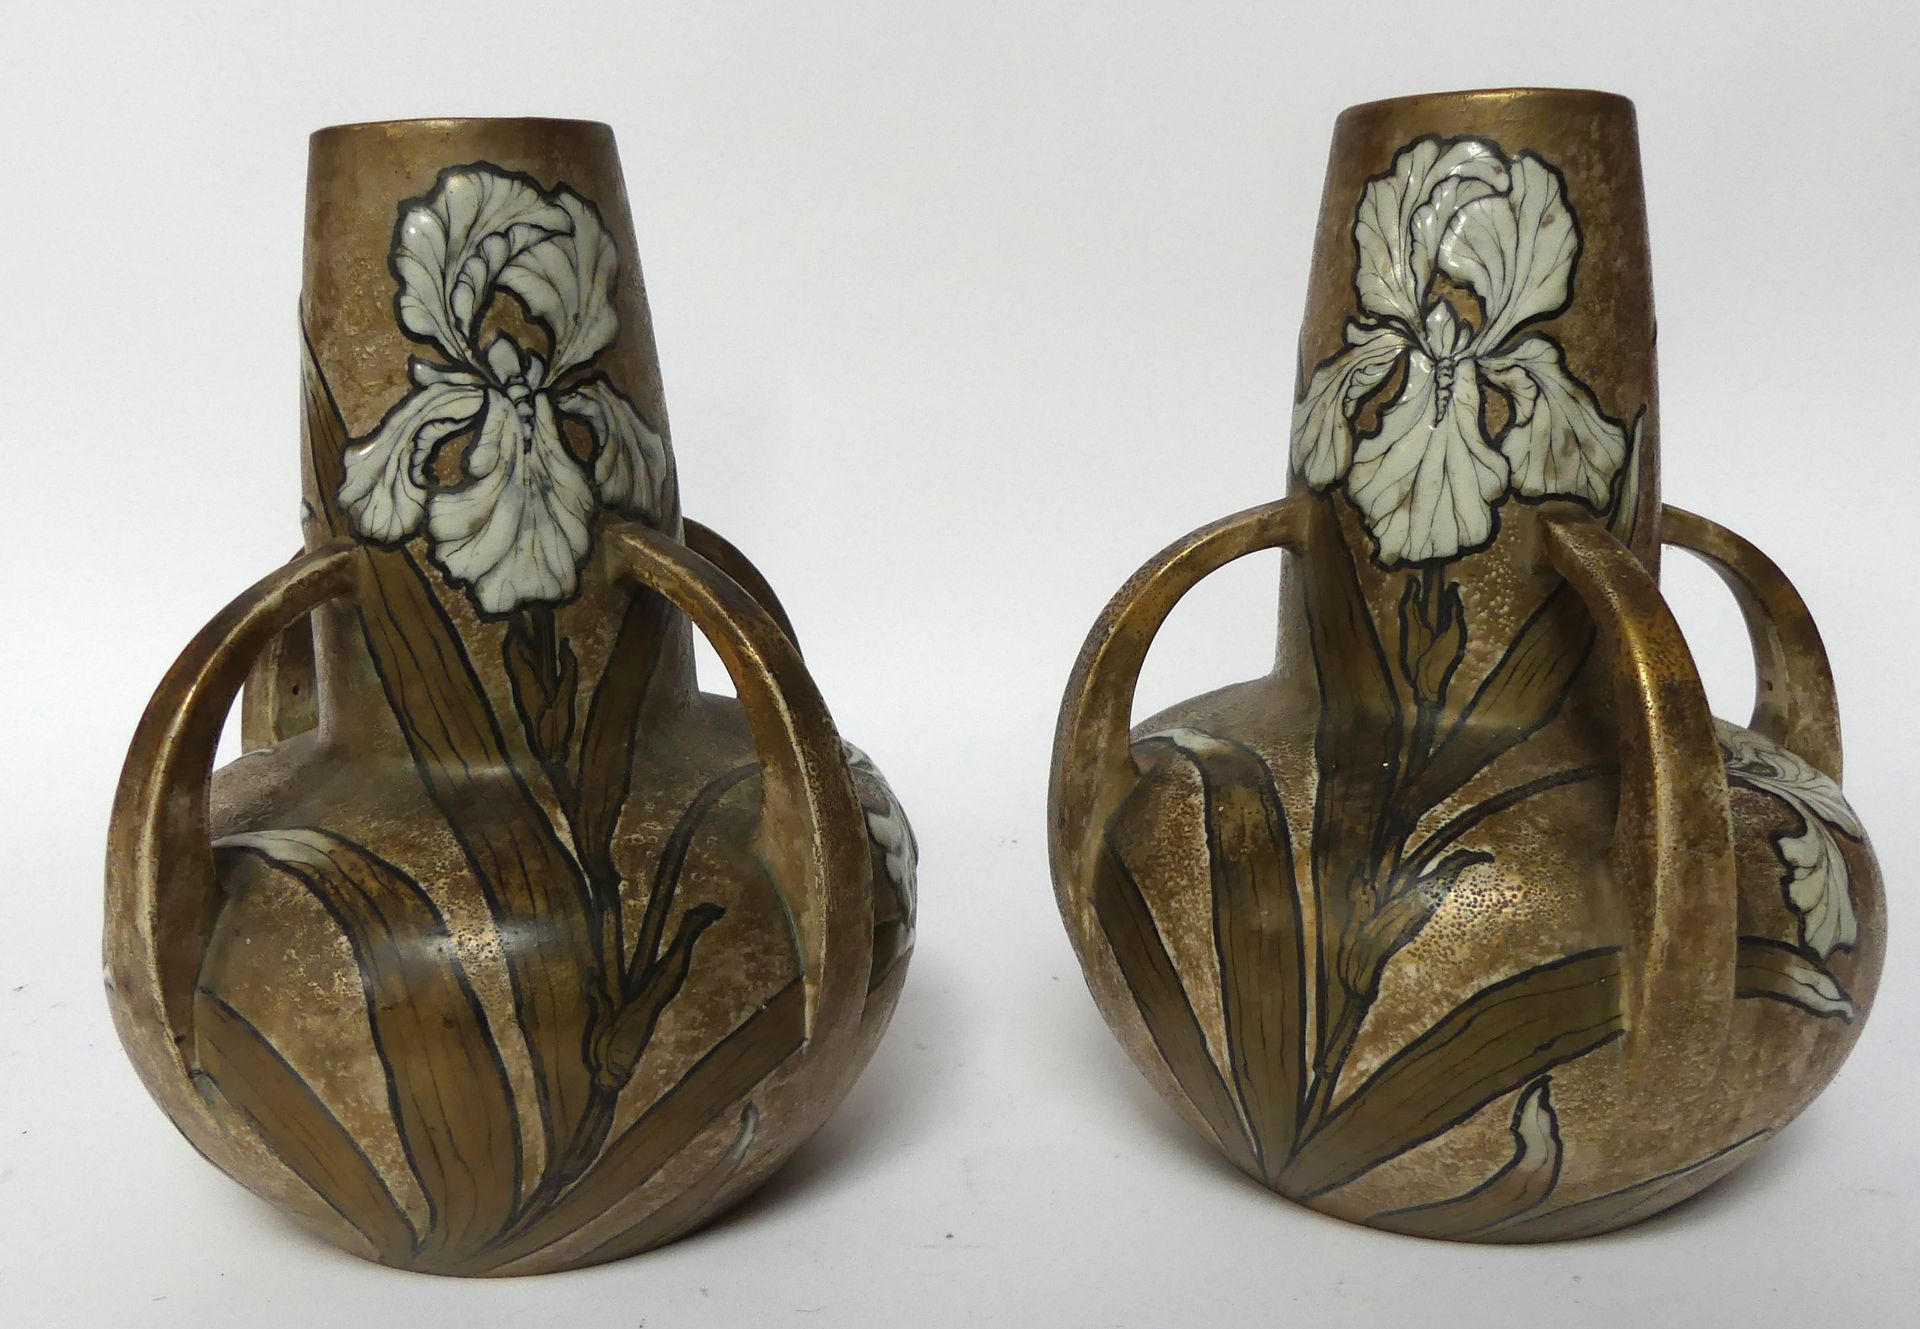 Null 转向特普利茨，奥地利。一对釉面陶瓷花瓶，低矮的瓶身有四个把手，在沙色和轻度镀金的背景上装饰着白色鸢尾花。高26厘米。